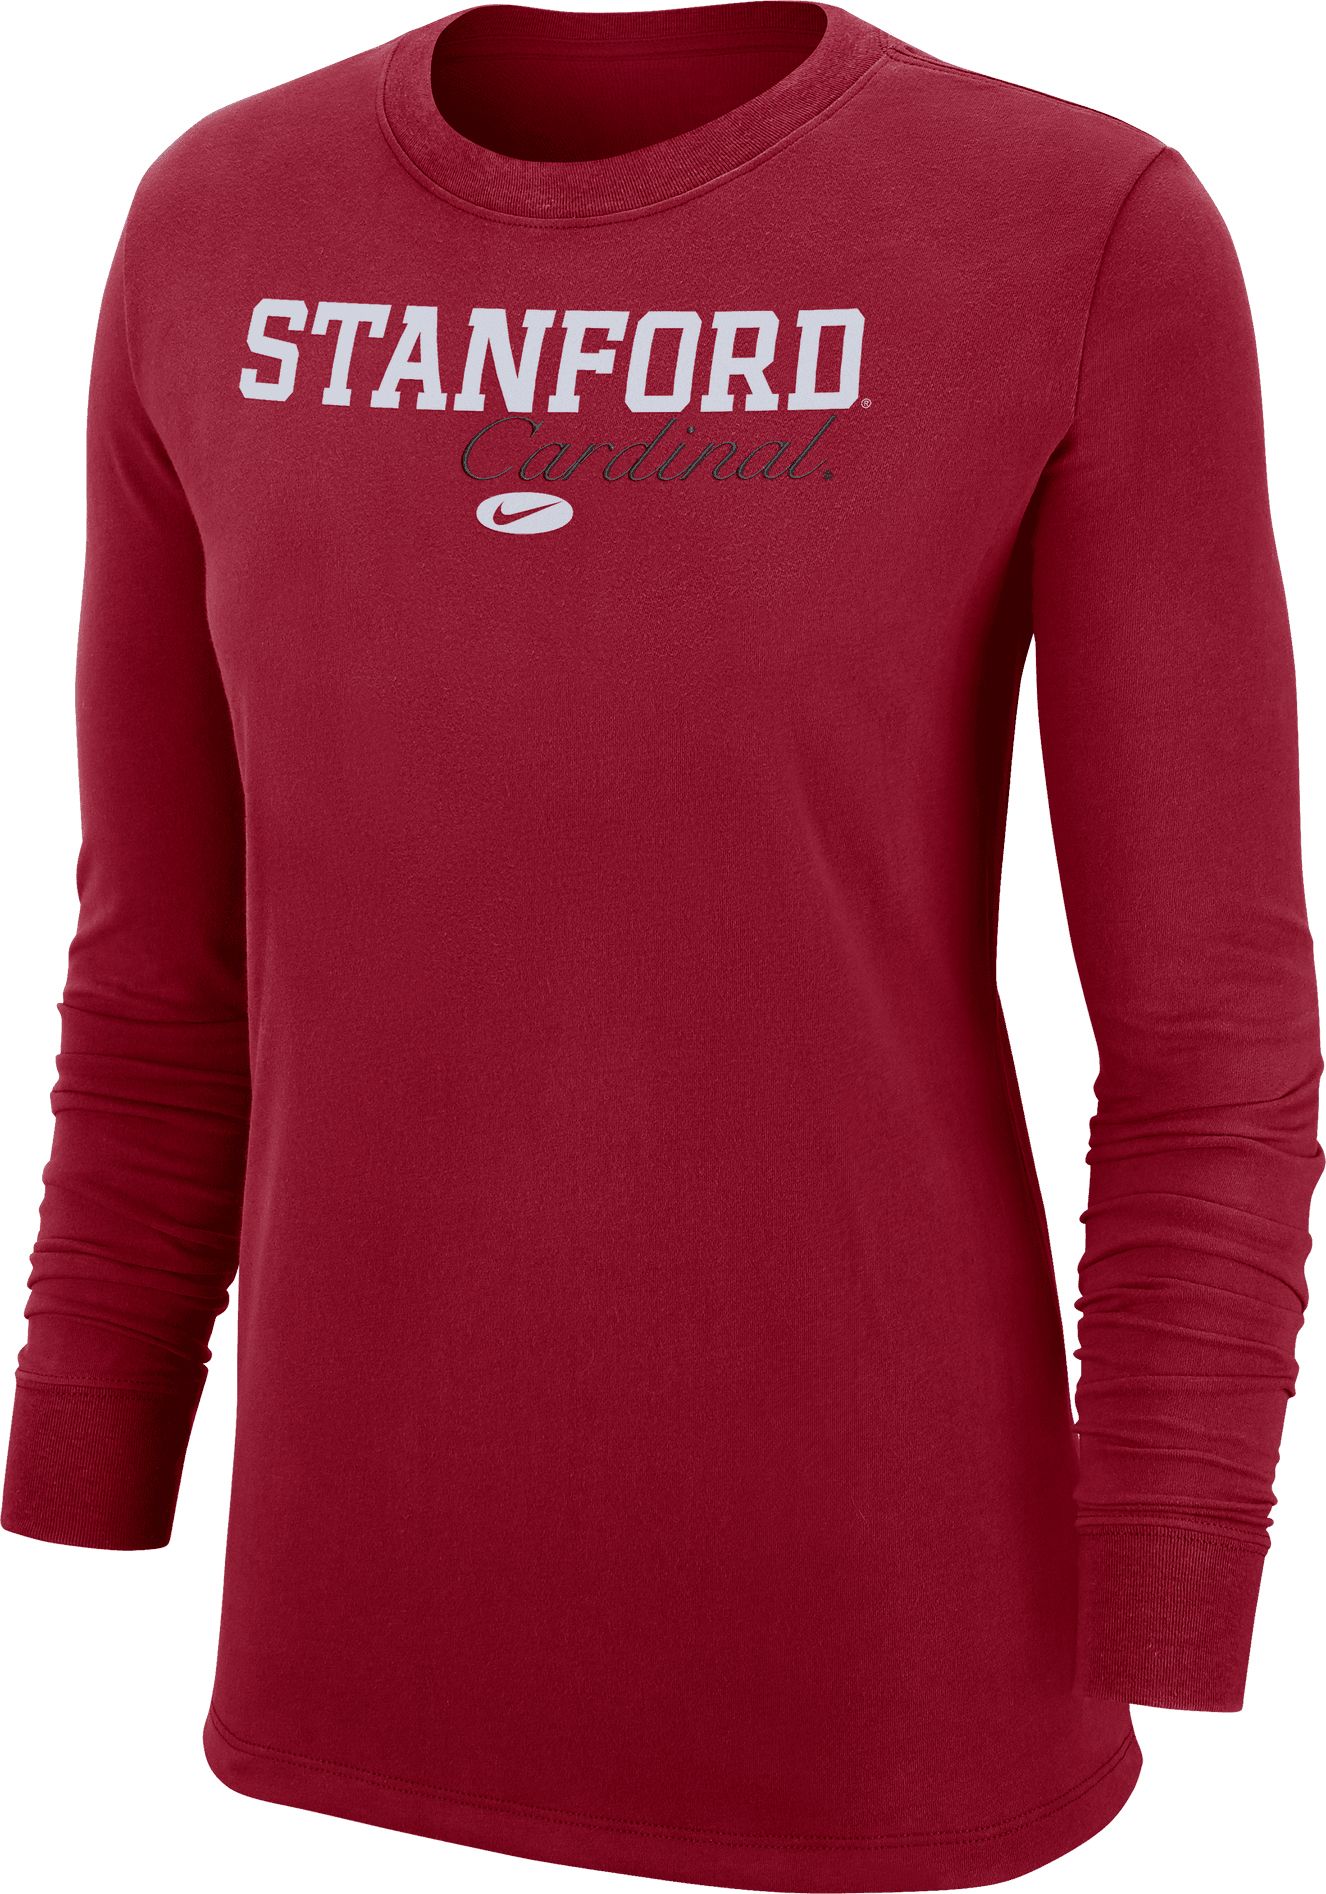 Nike Women's Stanford Cardinal Crew Long Sleeve T-Shirt